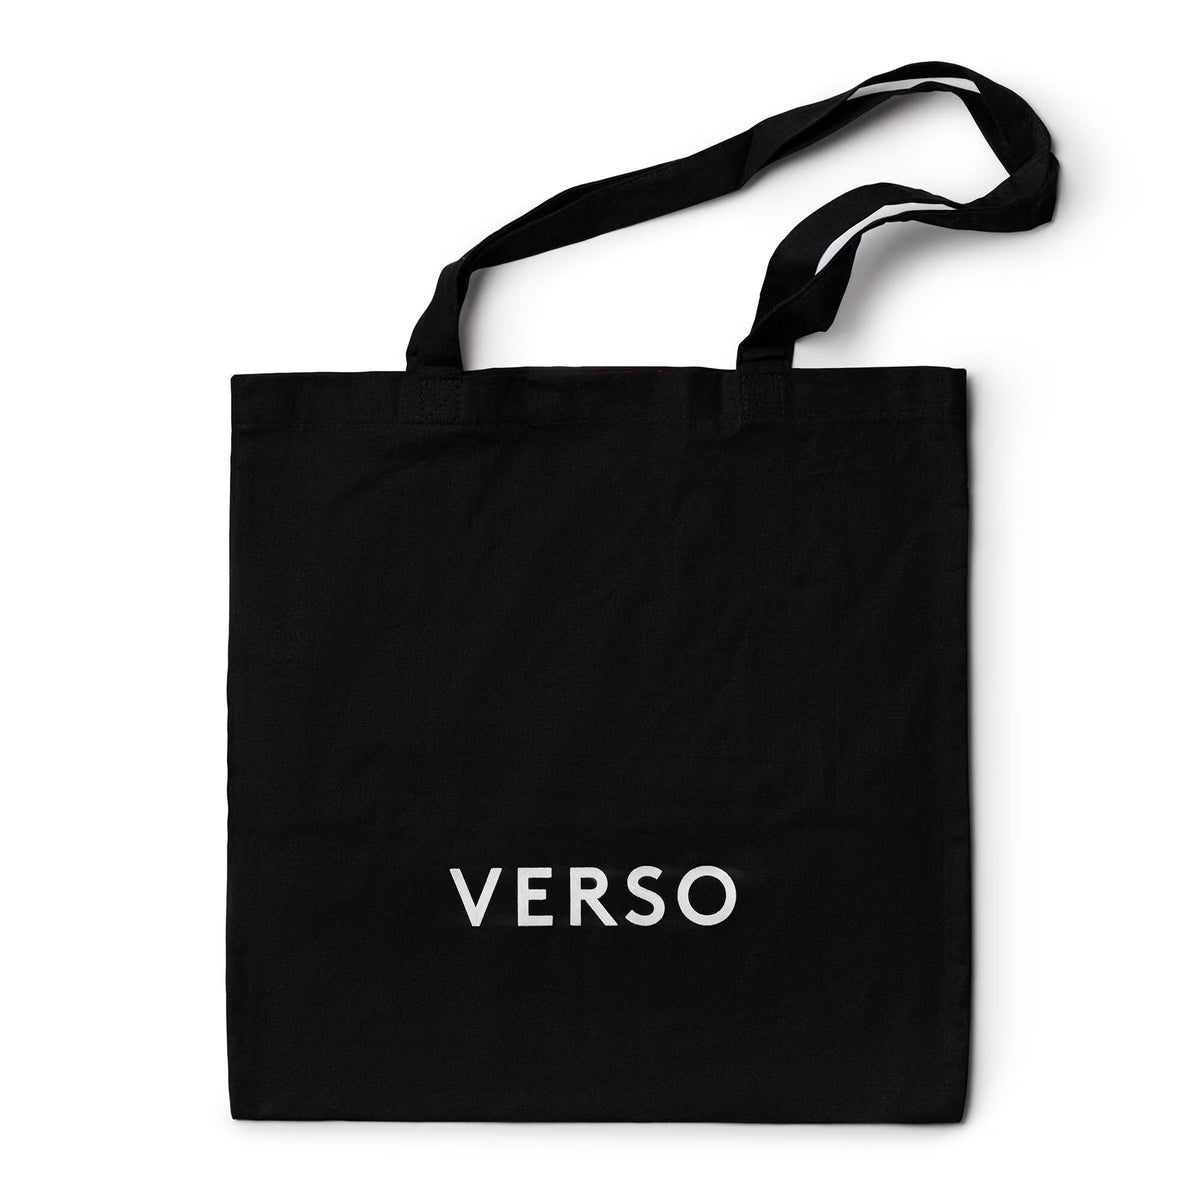 Free Gift - Verso Tote Bag